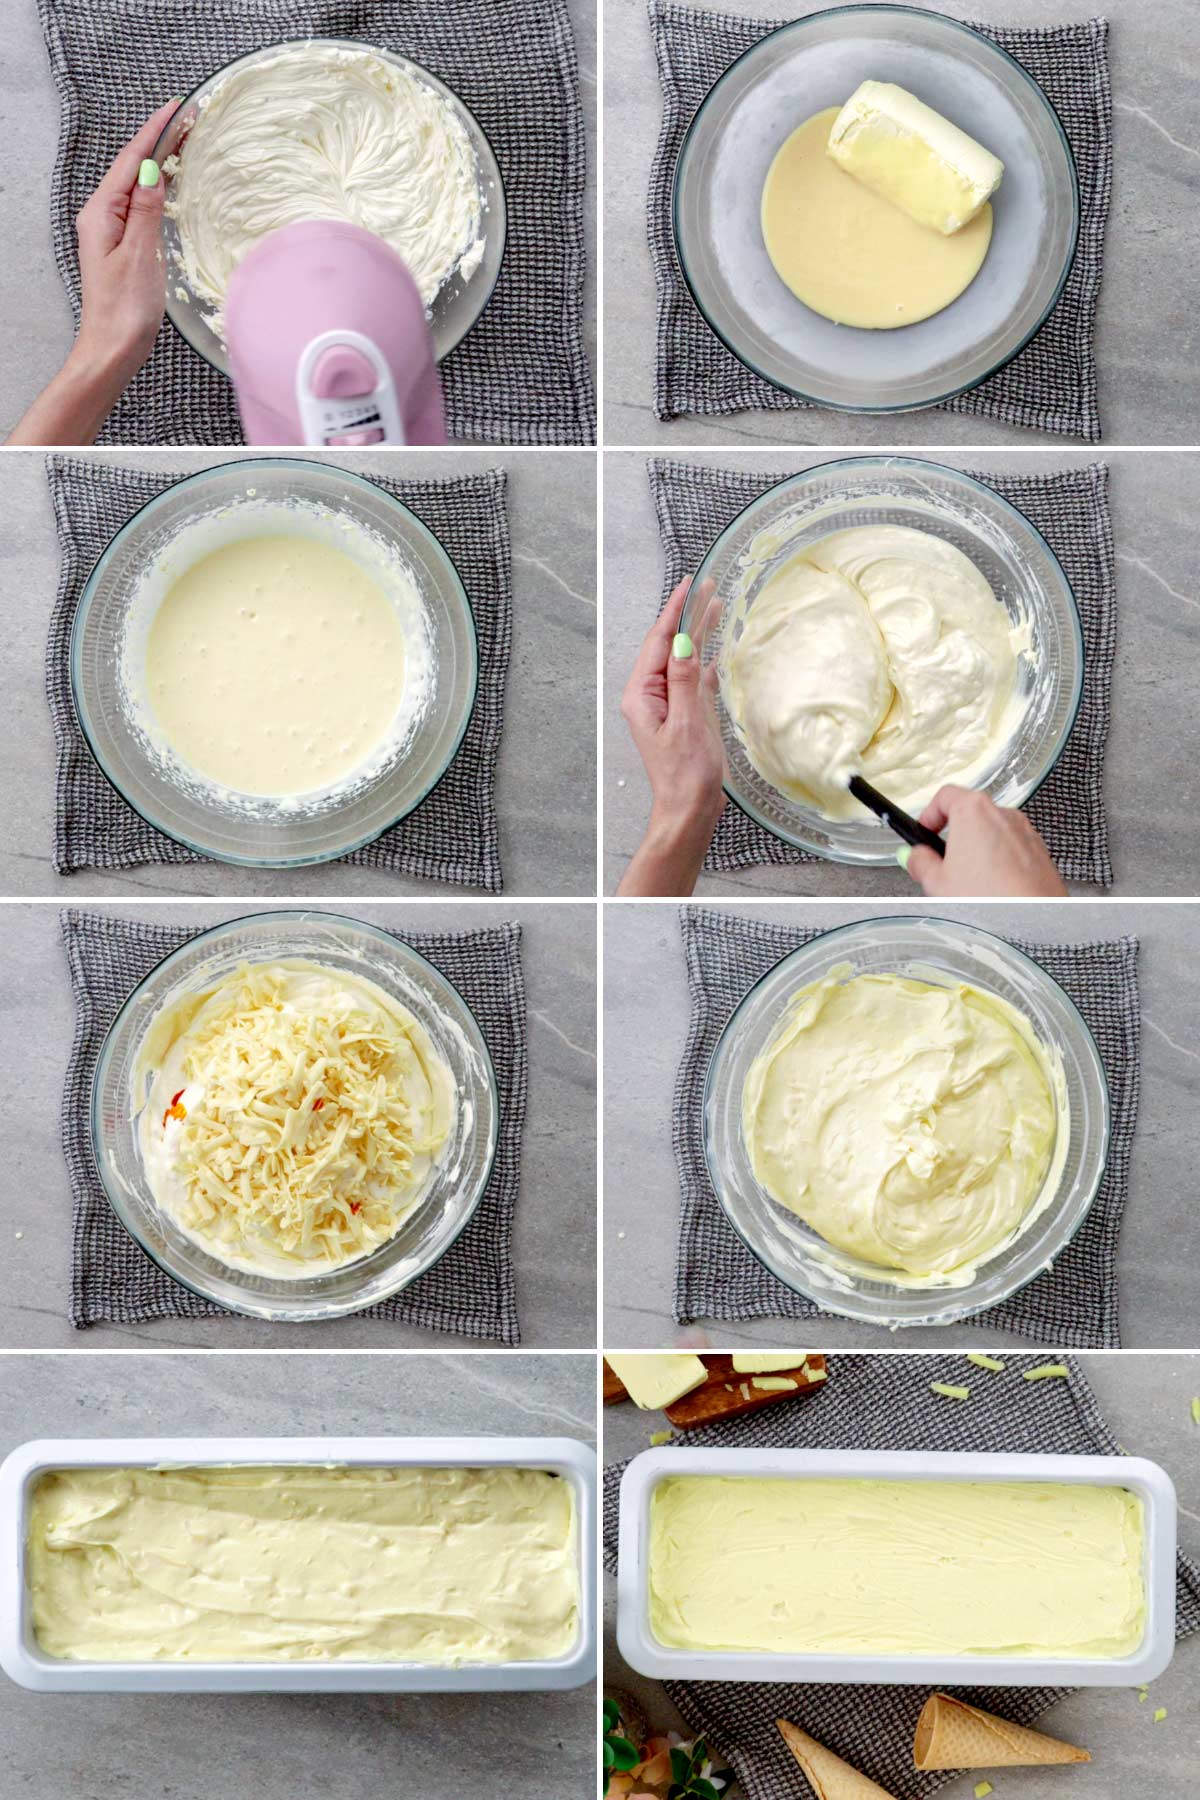 Steps in making homemade no-churn cheese ice cream.